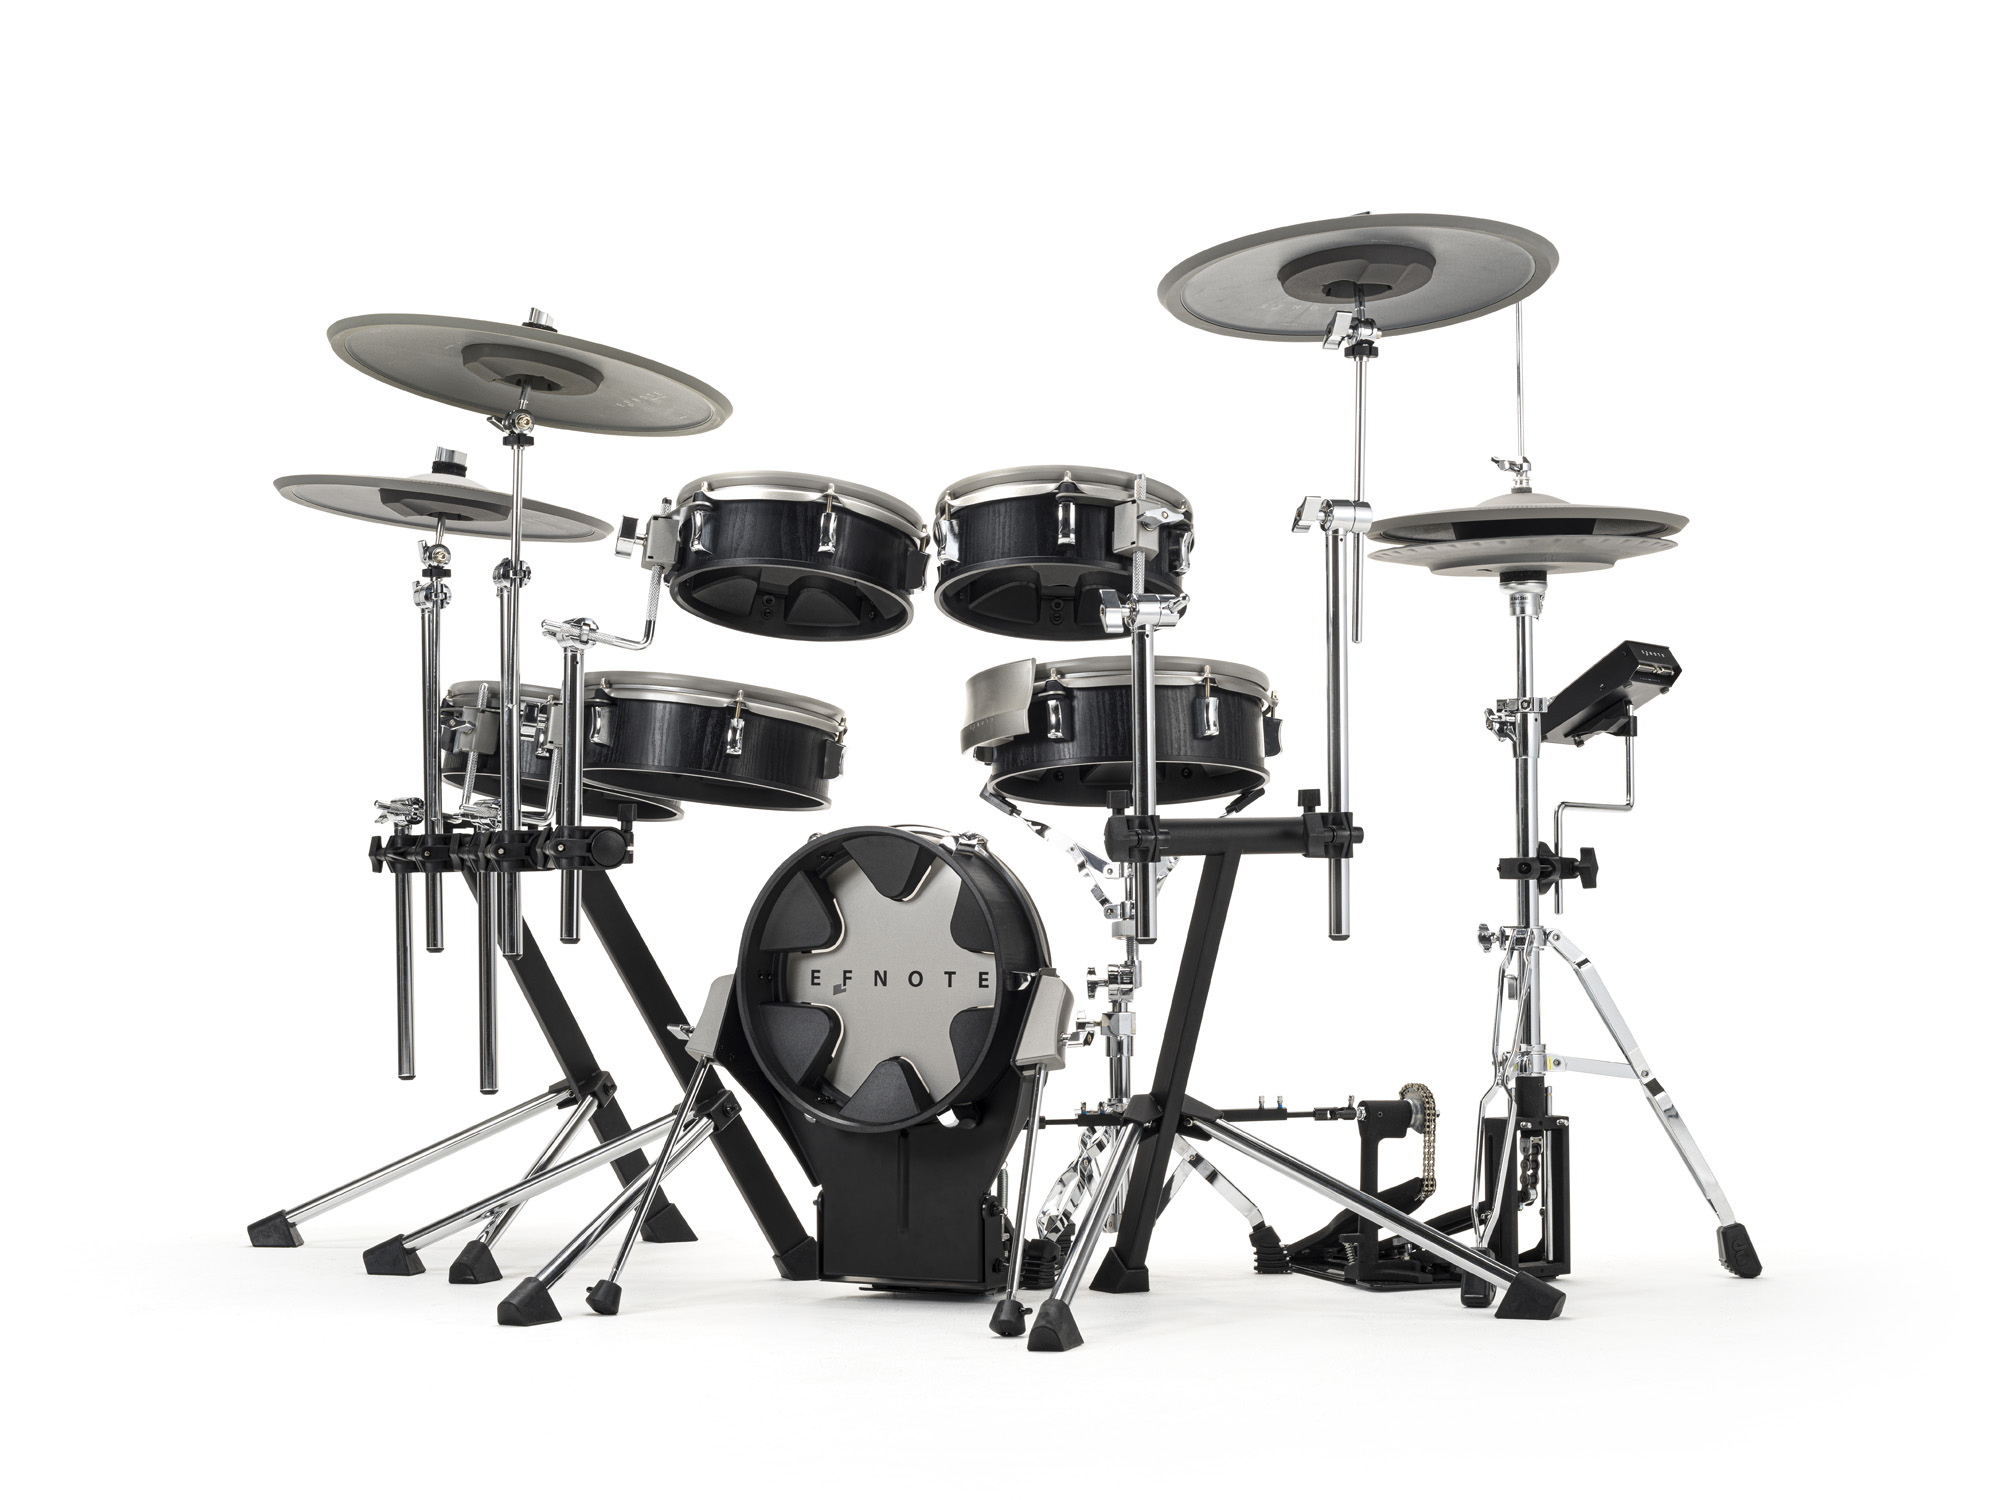 Efnote Efd3x Drum Kit - Electronic drum kit & set - Variation 1